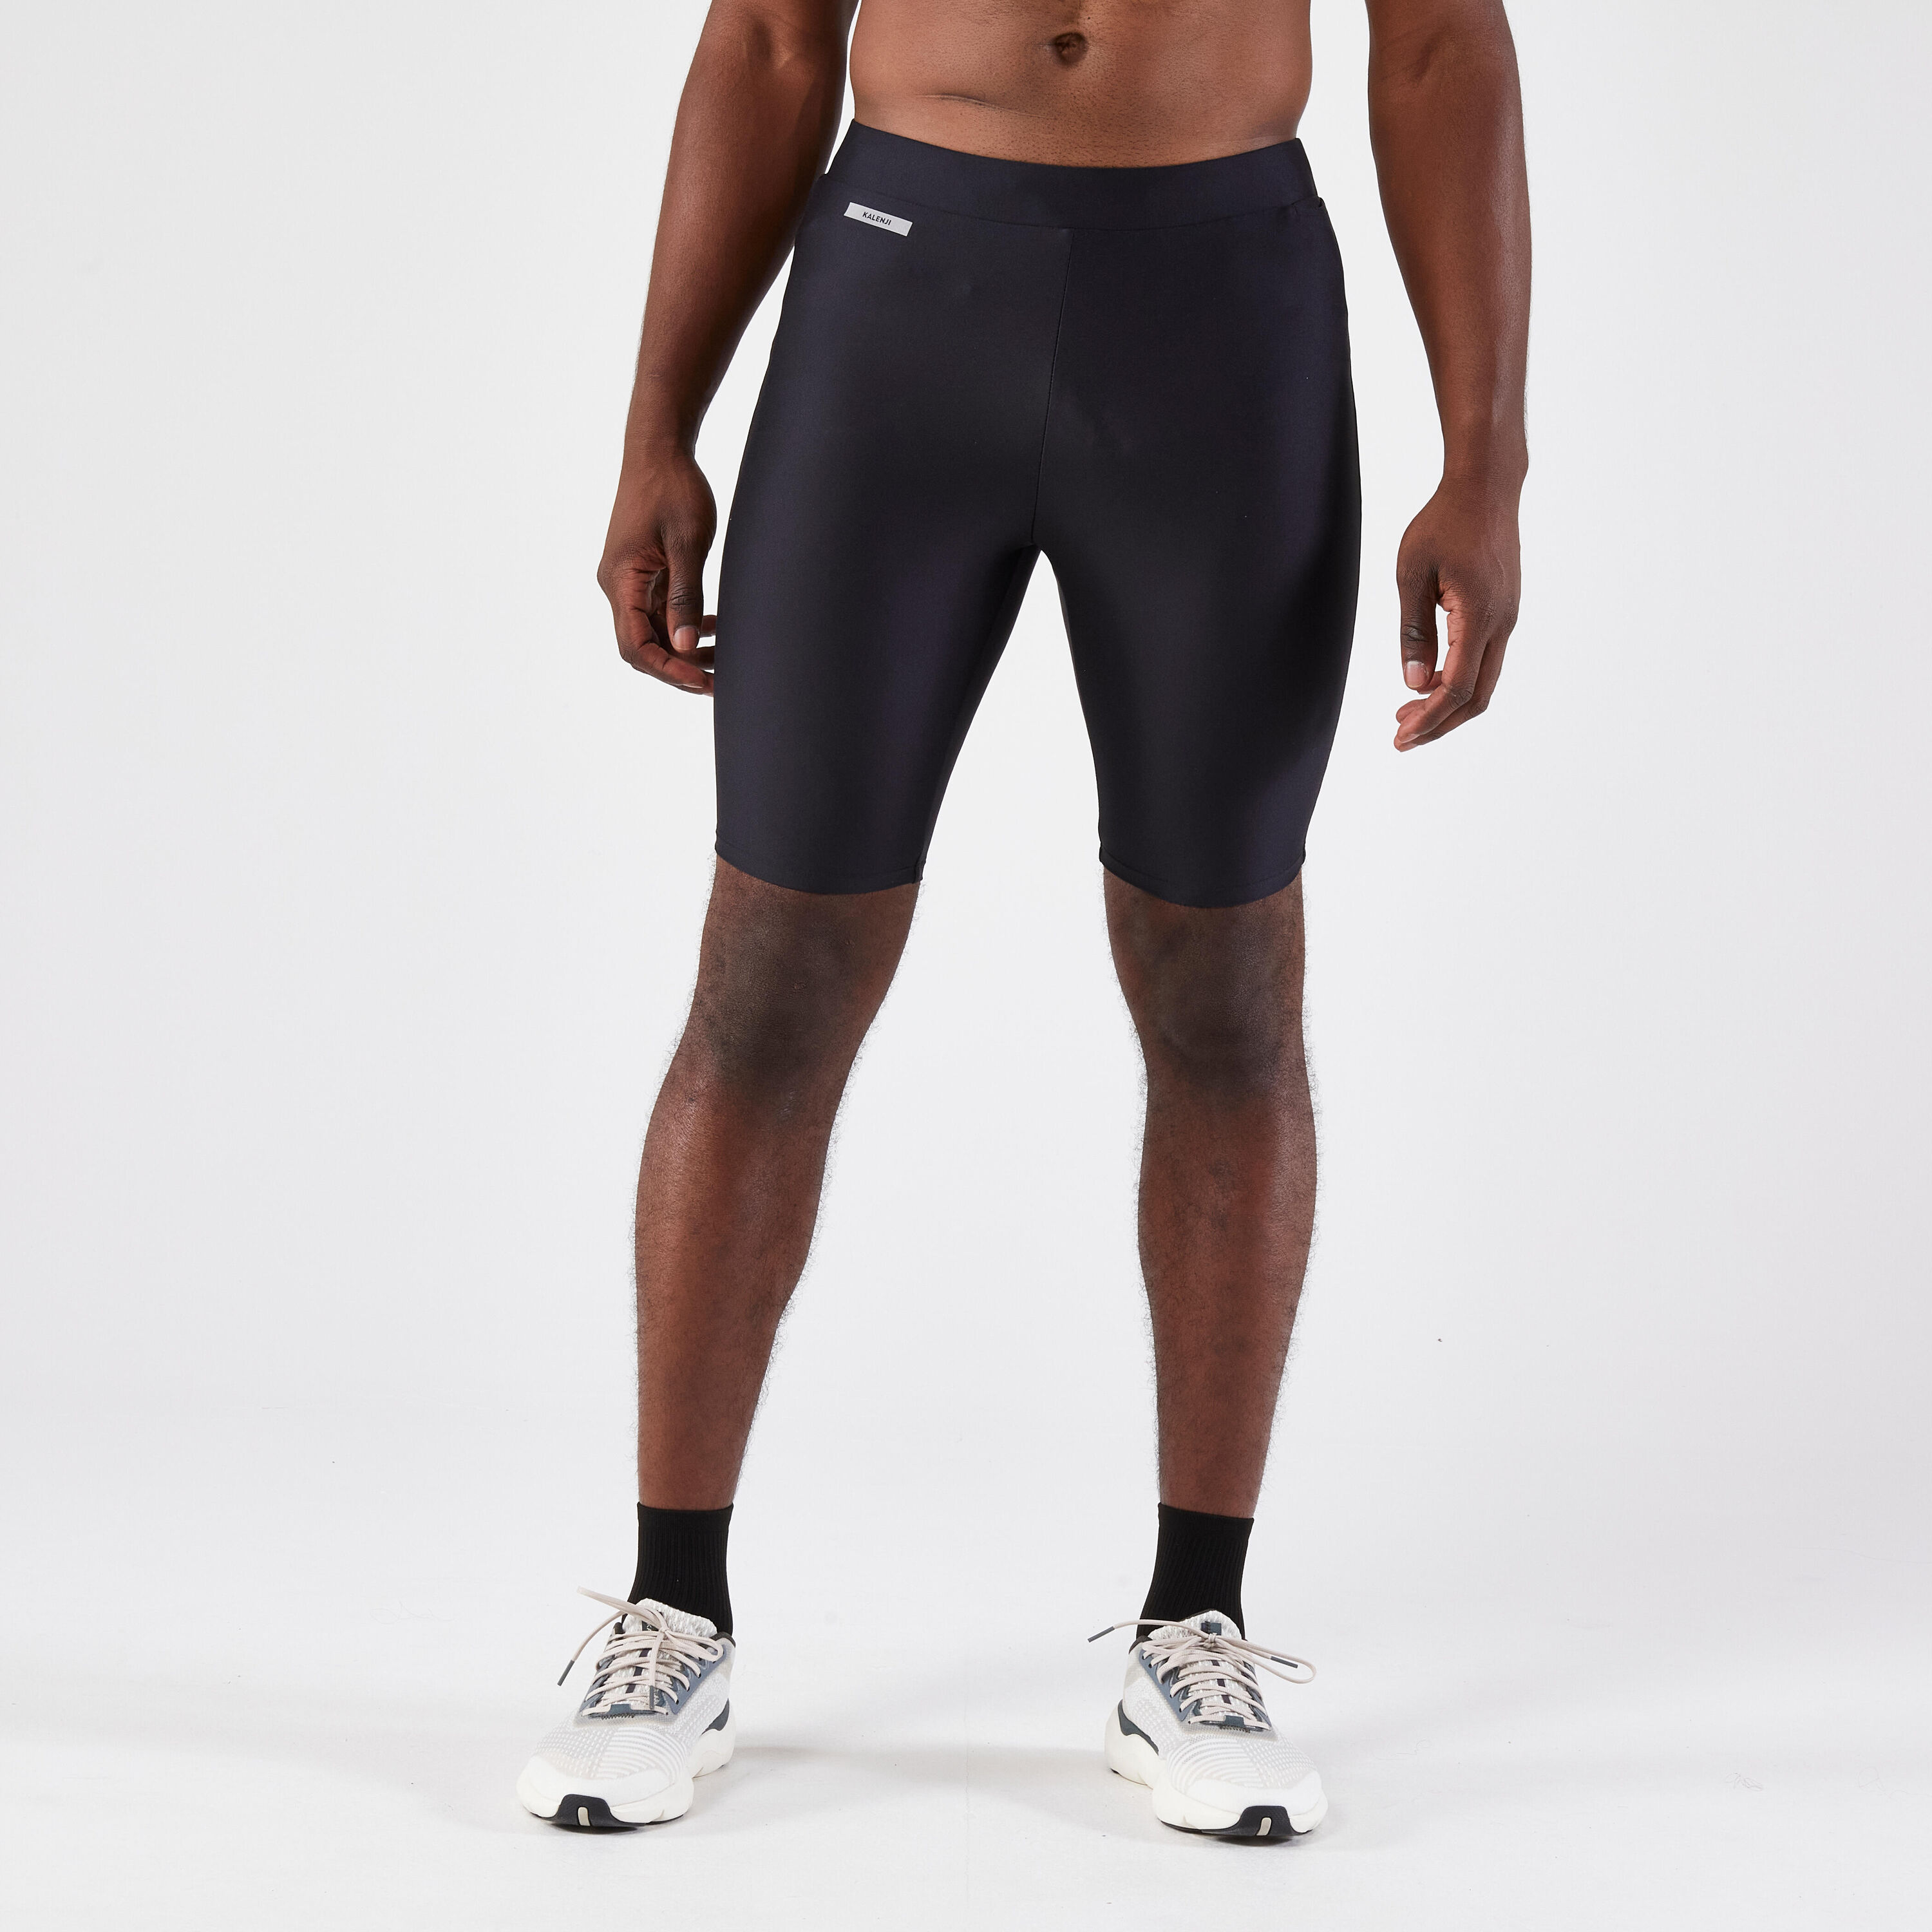 Mens Teal Bodybuilding Spandex Compression Shorts Half Tights Pockets Small  S